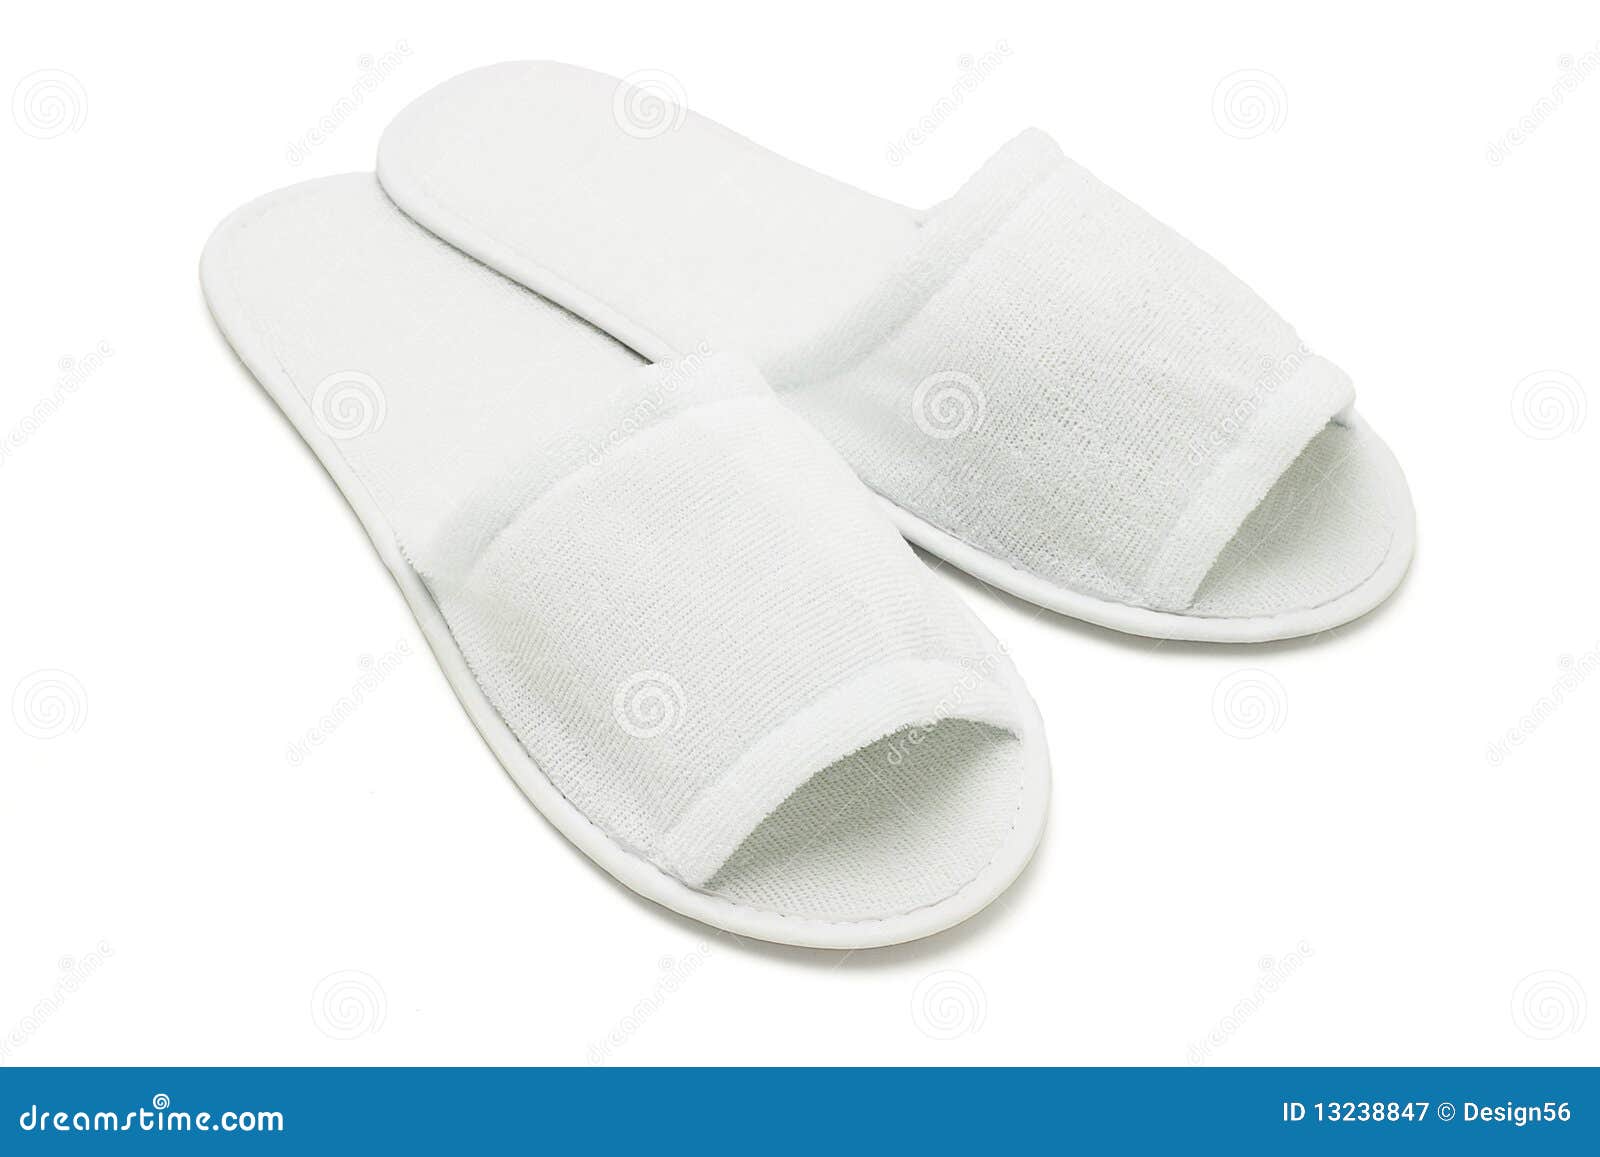 Plain white slippers stock image. Image 